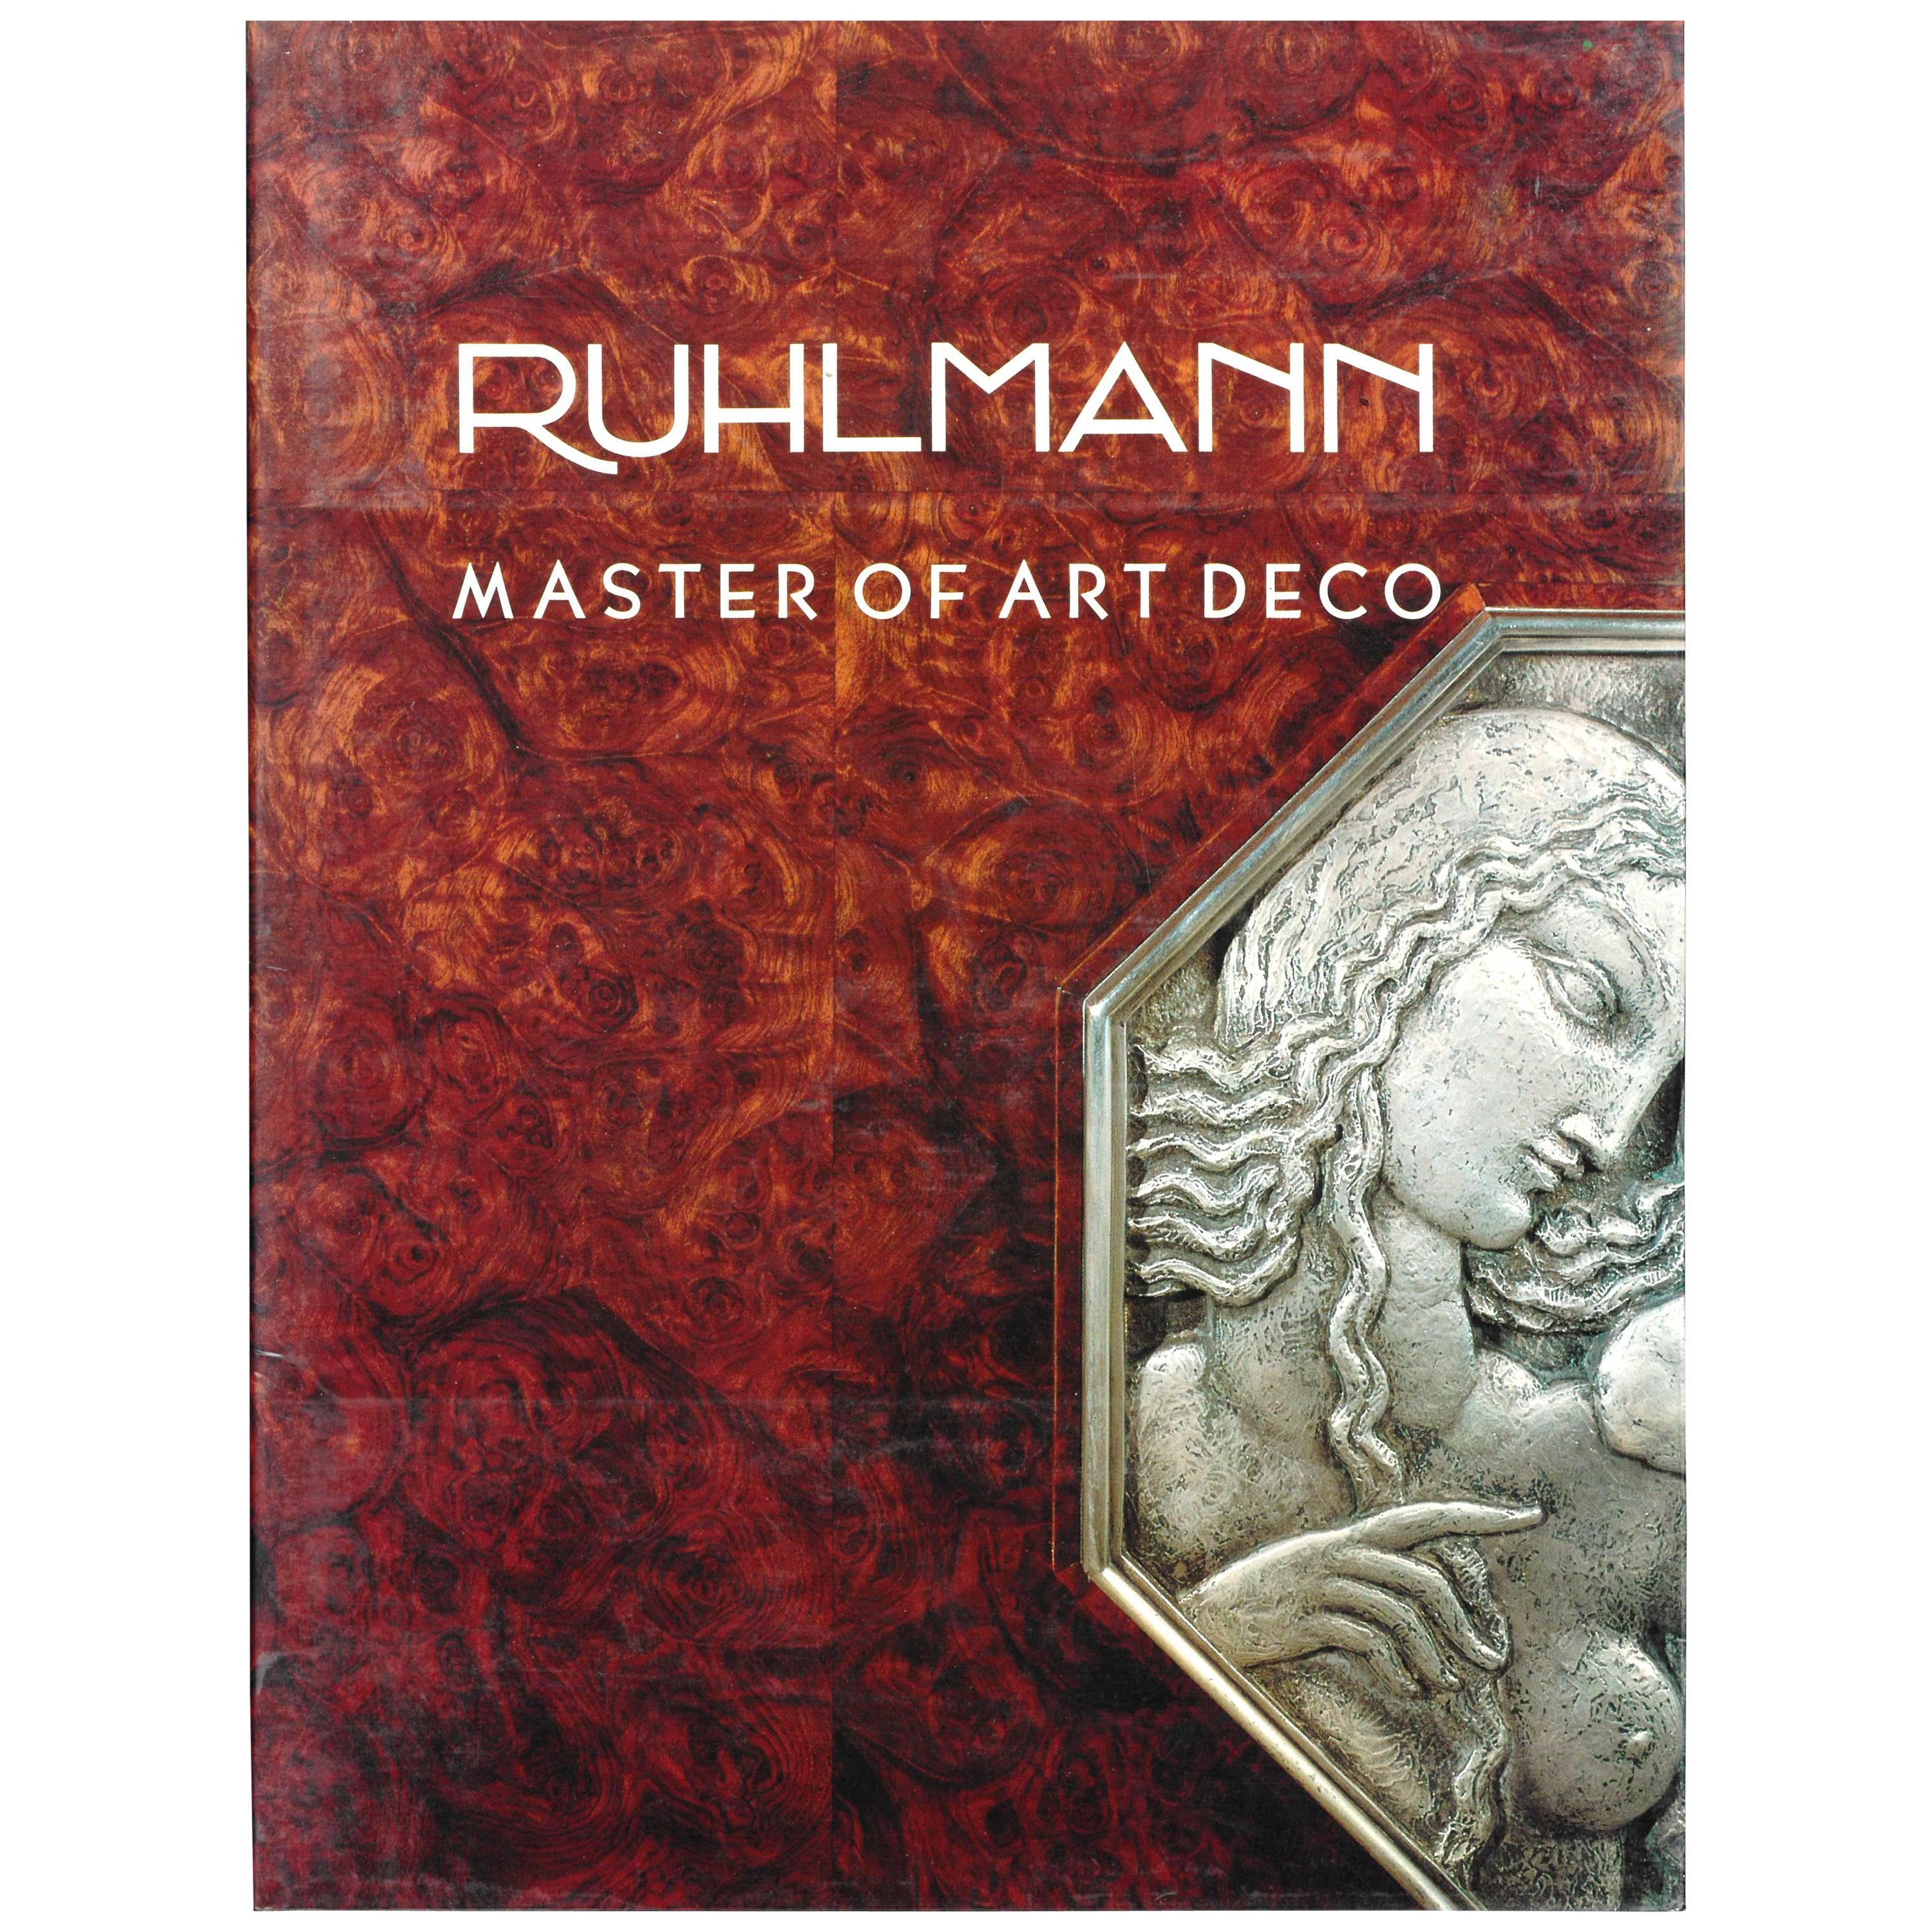 Ruhlmann: Master of Art Deco by Florence Camard (Book)